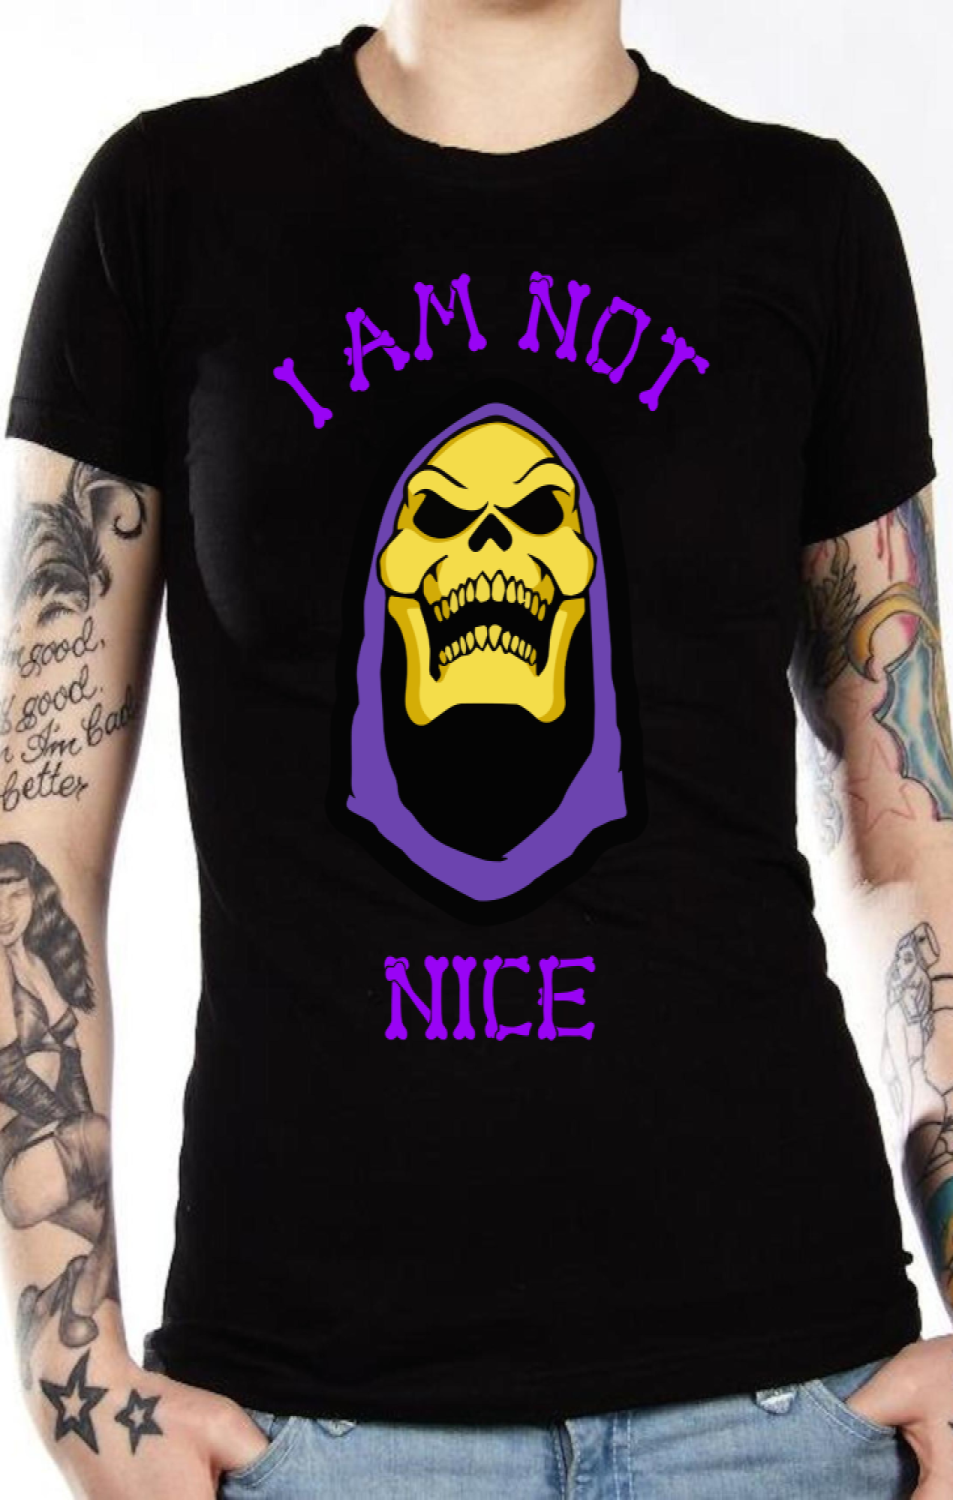 I am not nice